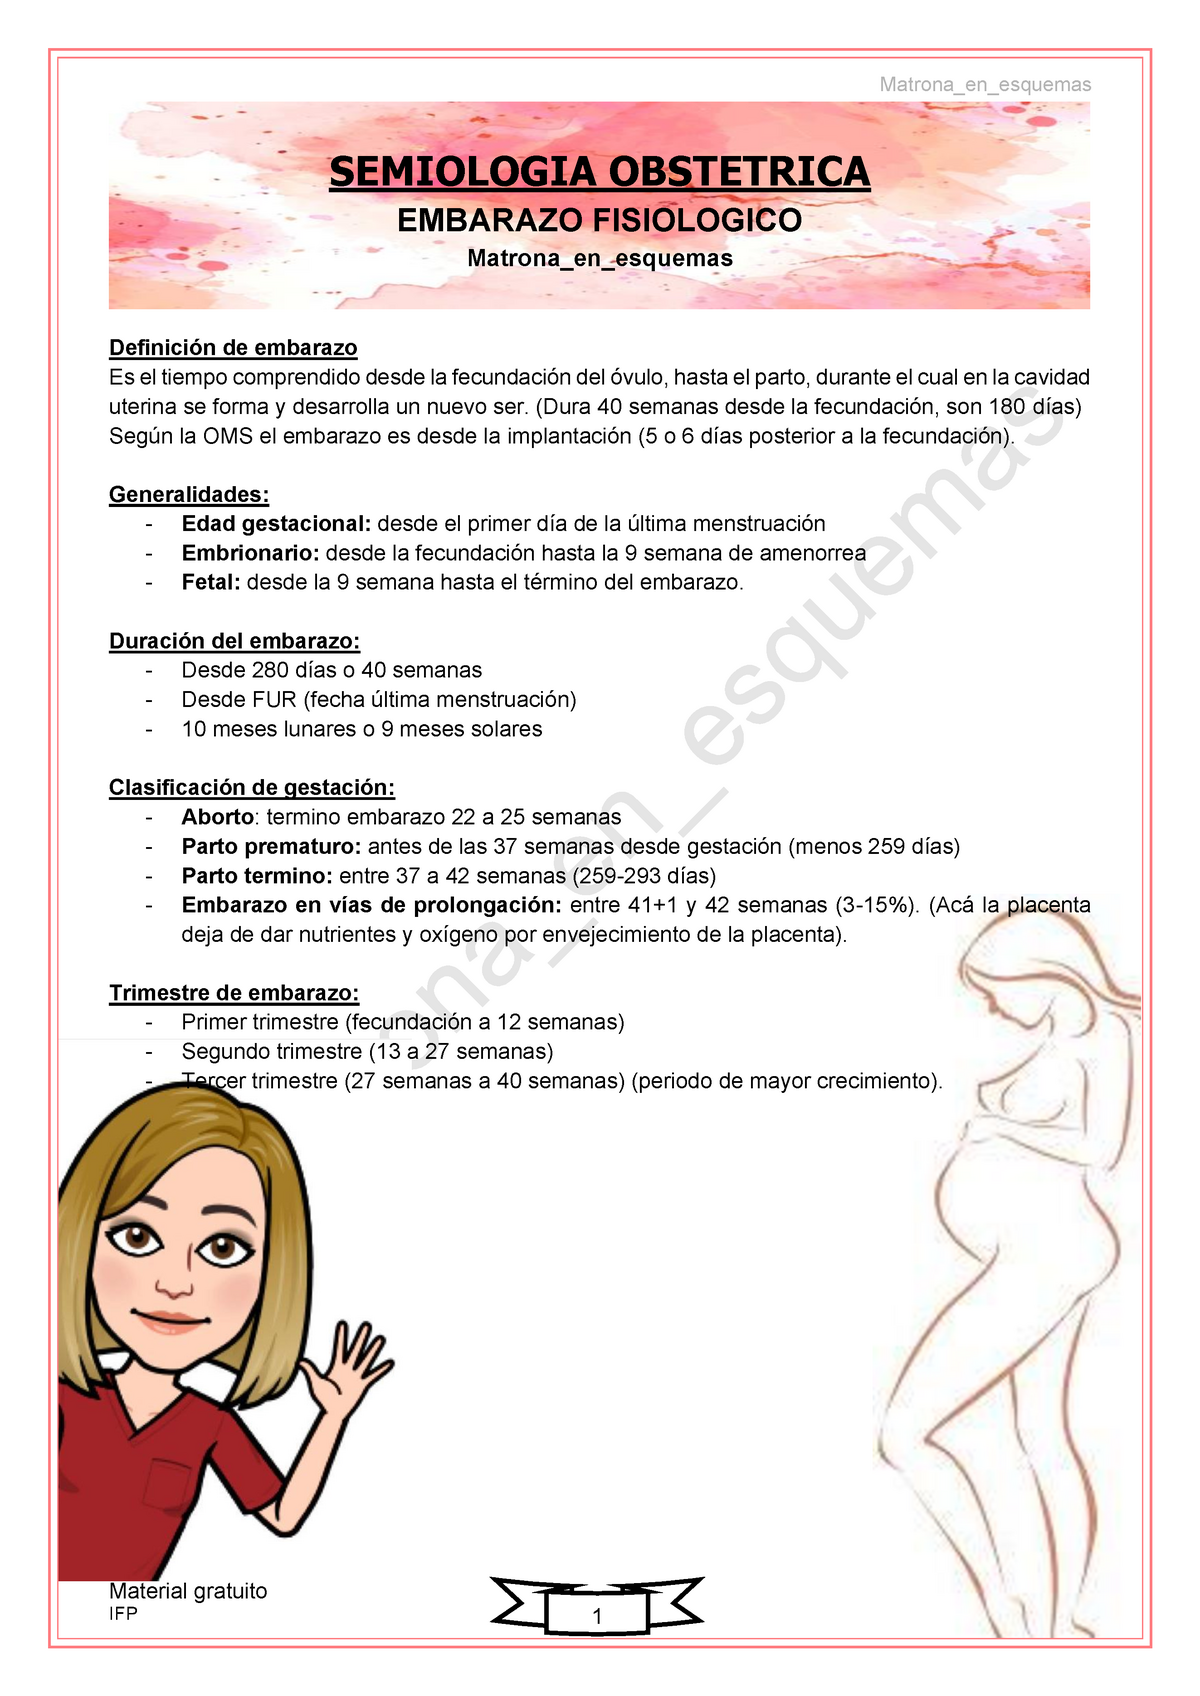 Resumen Semiologia Obstetrica Material Gratuito Semiologia Obstetrica Embarazo Fisiologico 